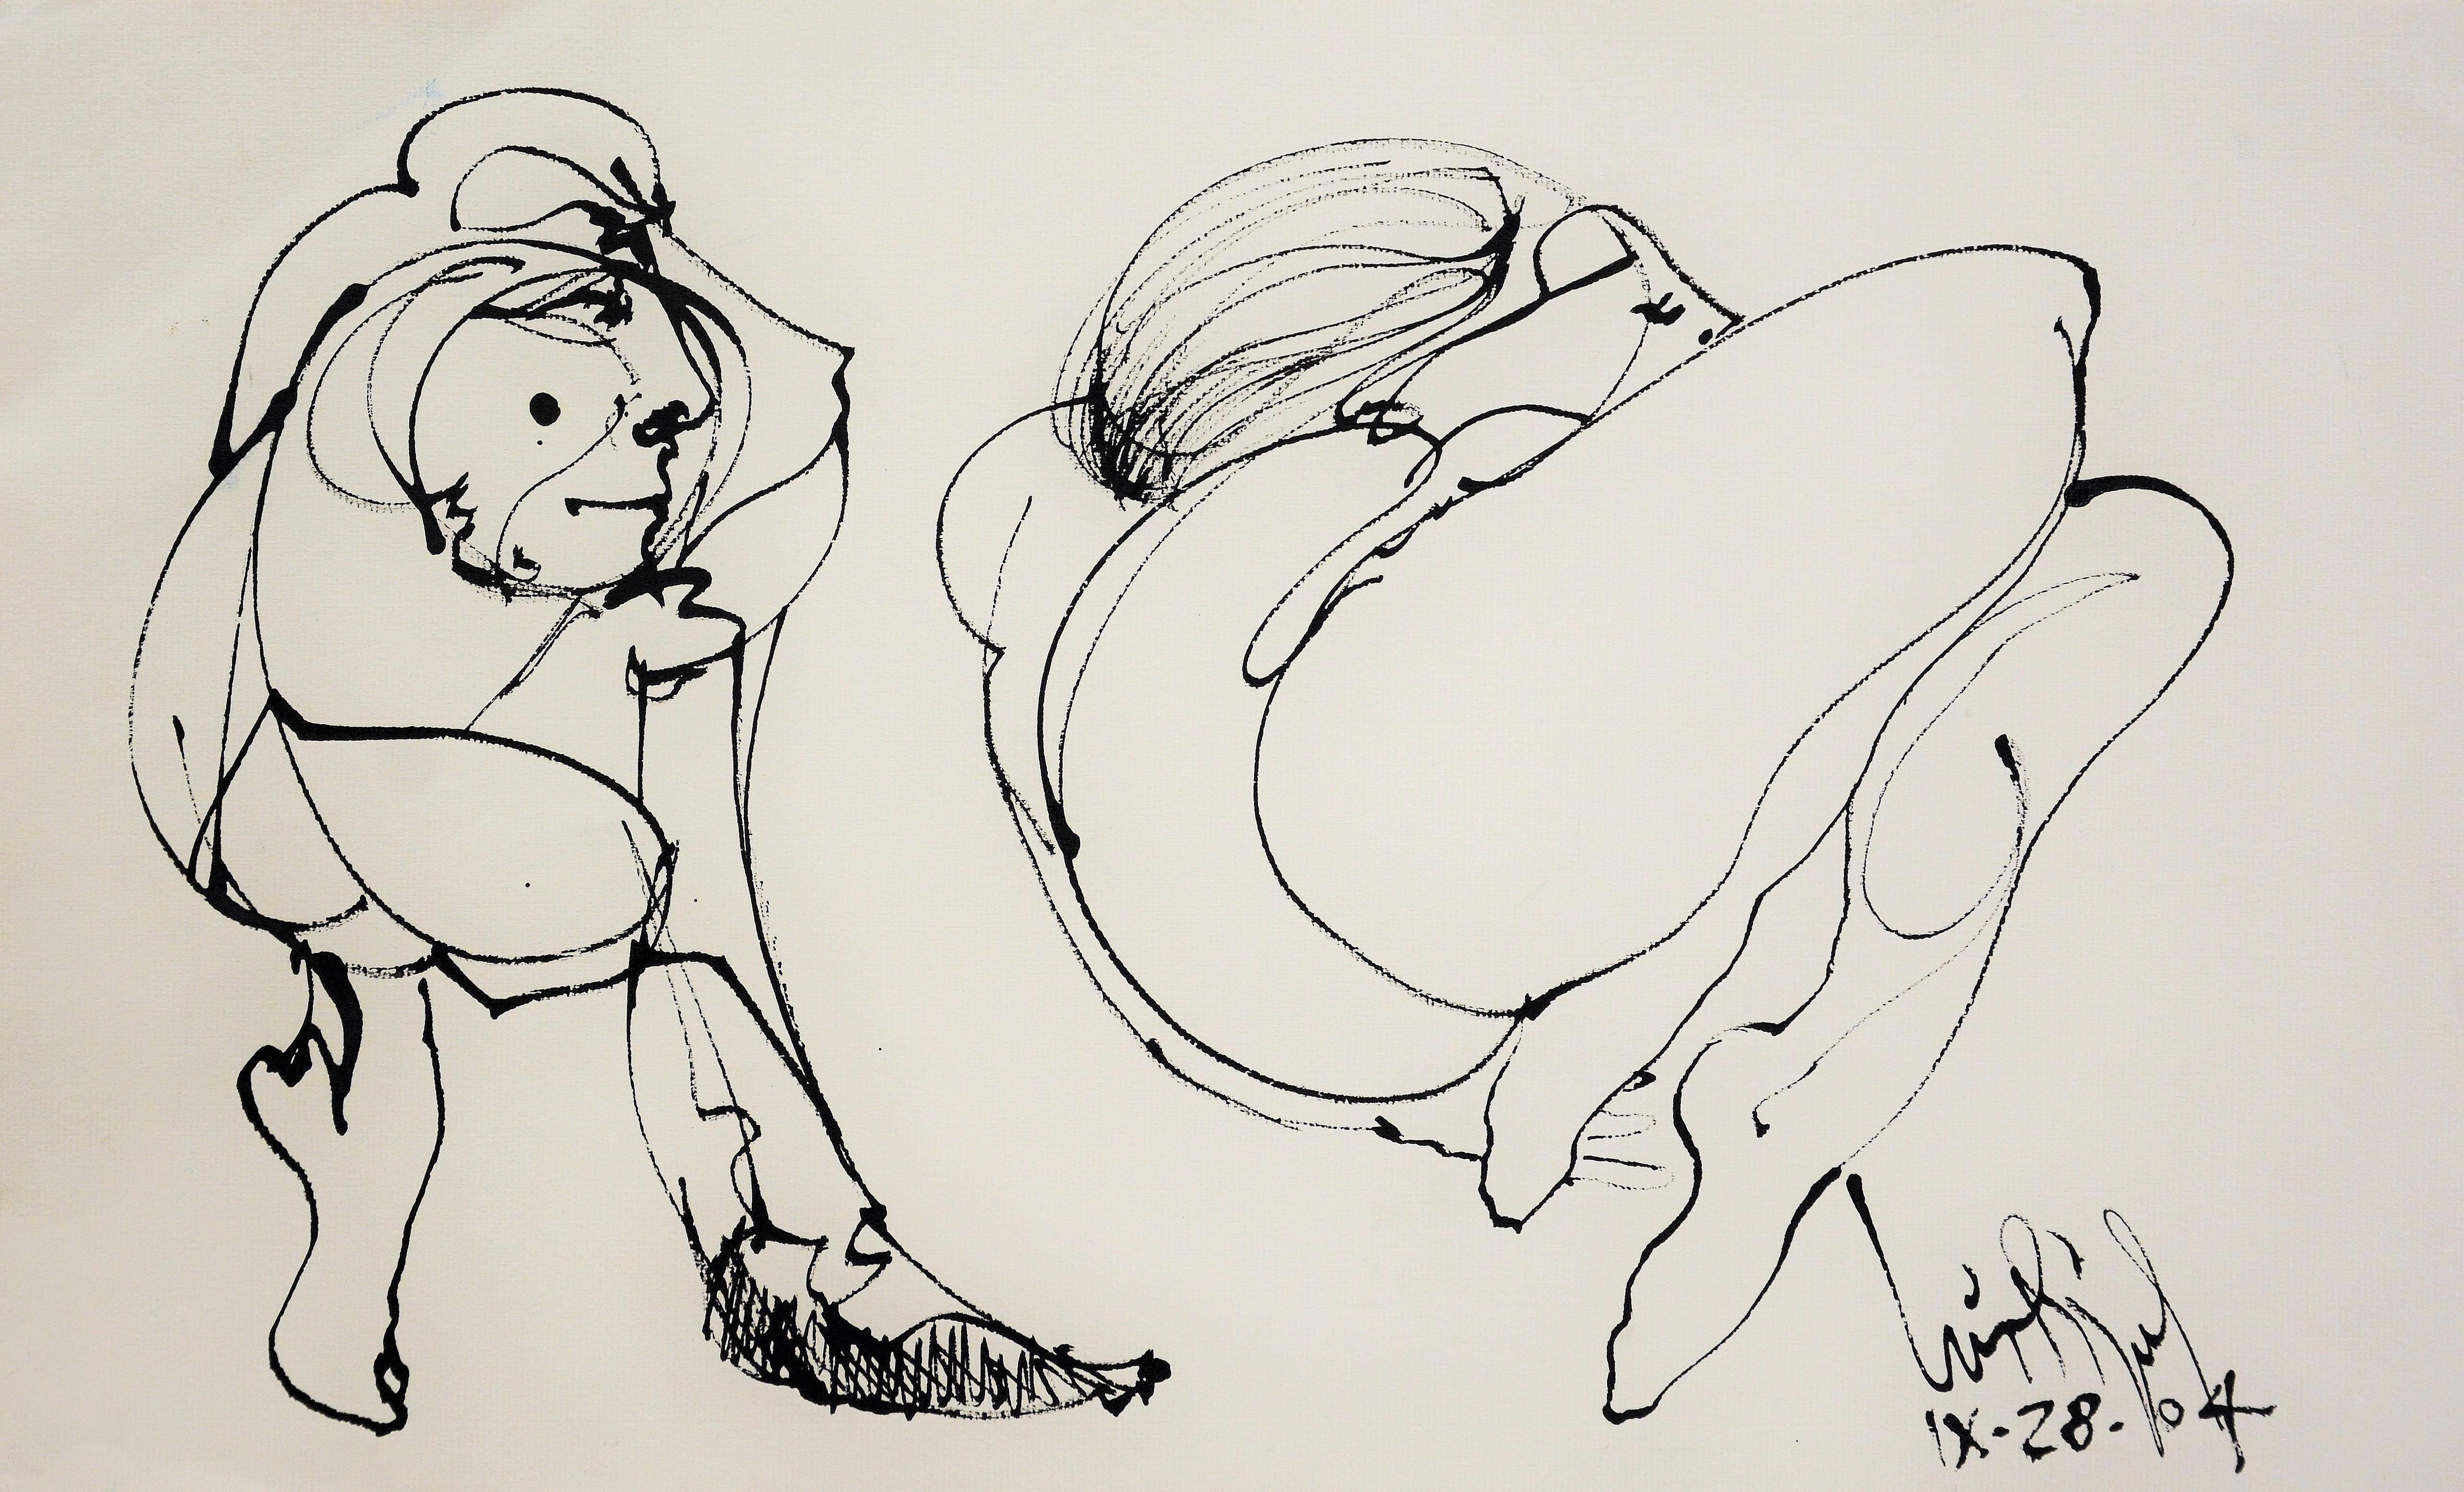 Luis Miguel Valdes, ¨Dos sentados¨, 2004, Work on paper, 11.9x19.7 in - Art by Luis Miguel Valdes 